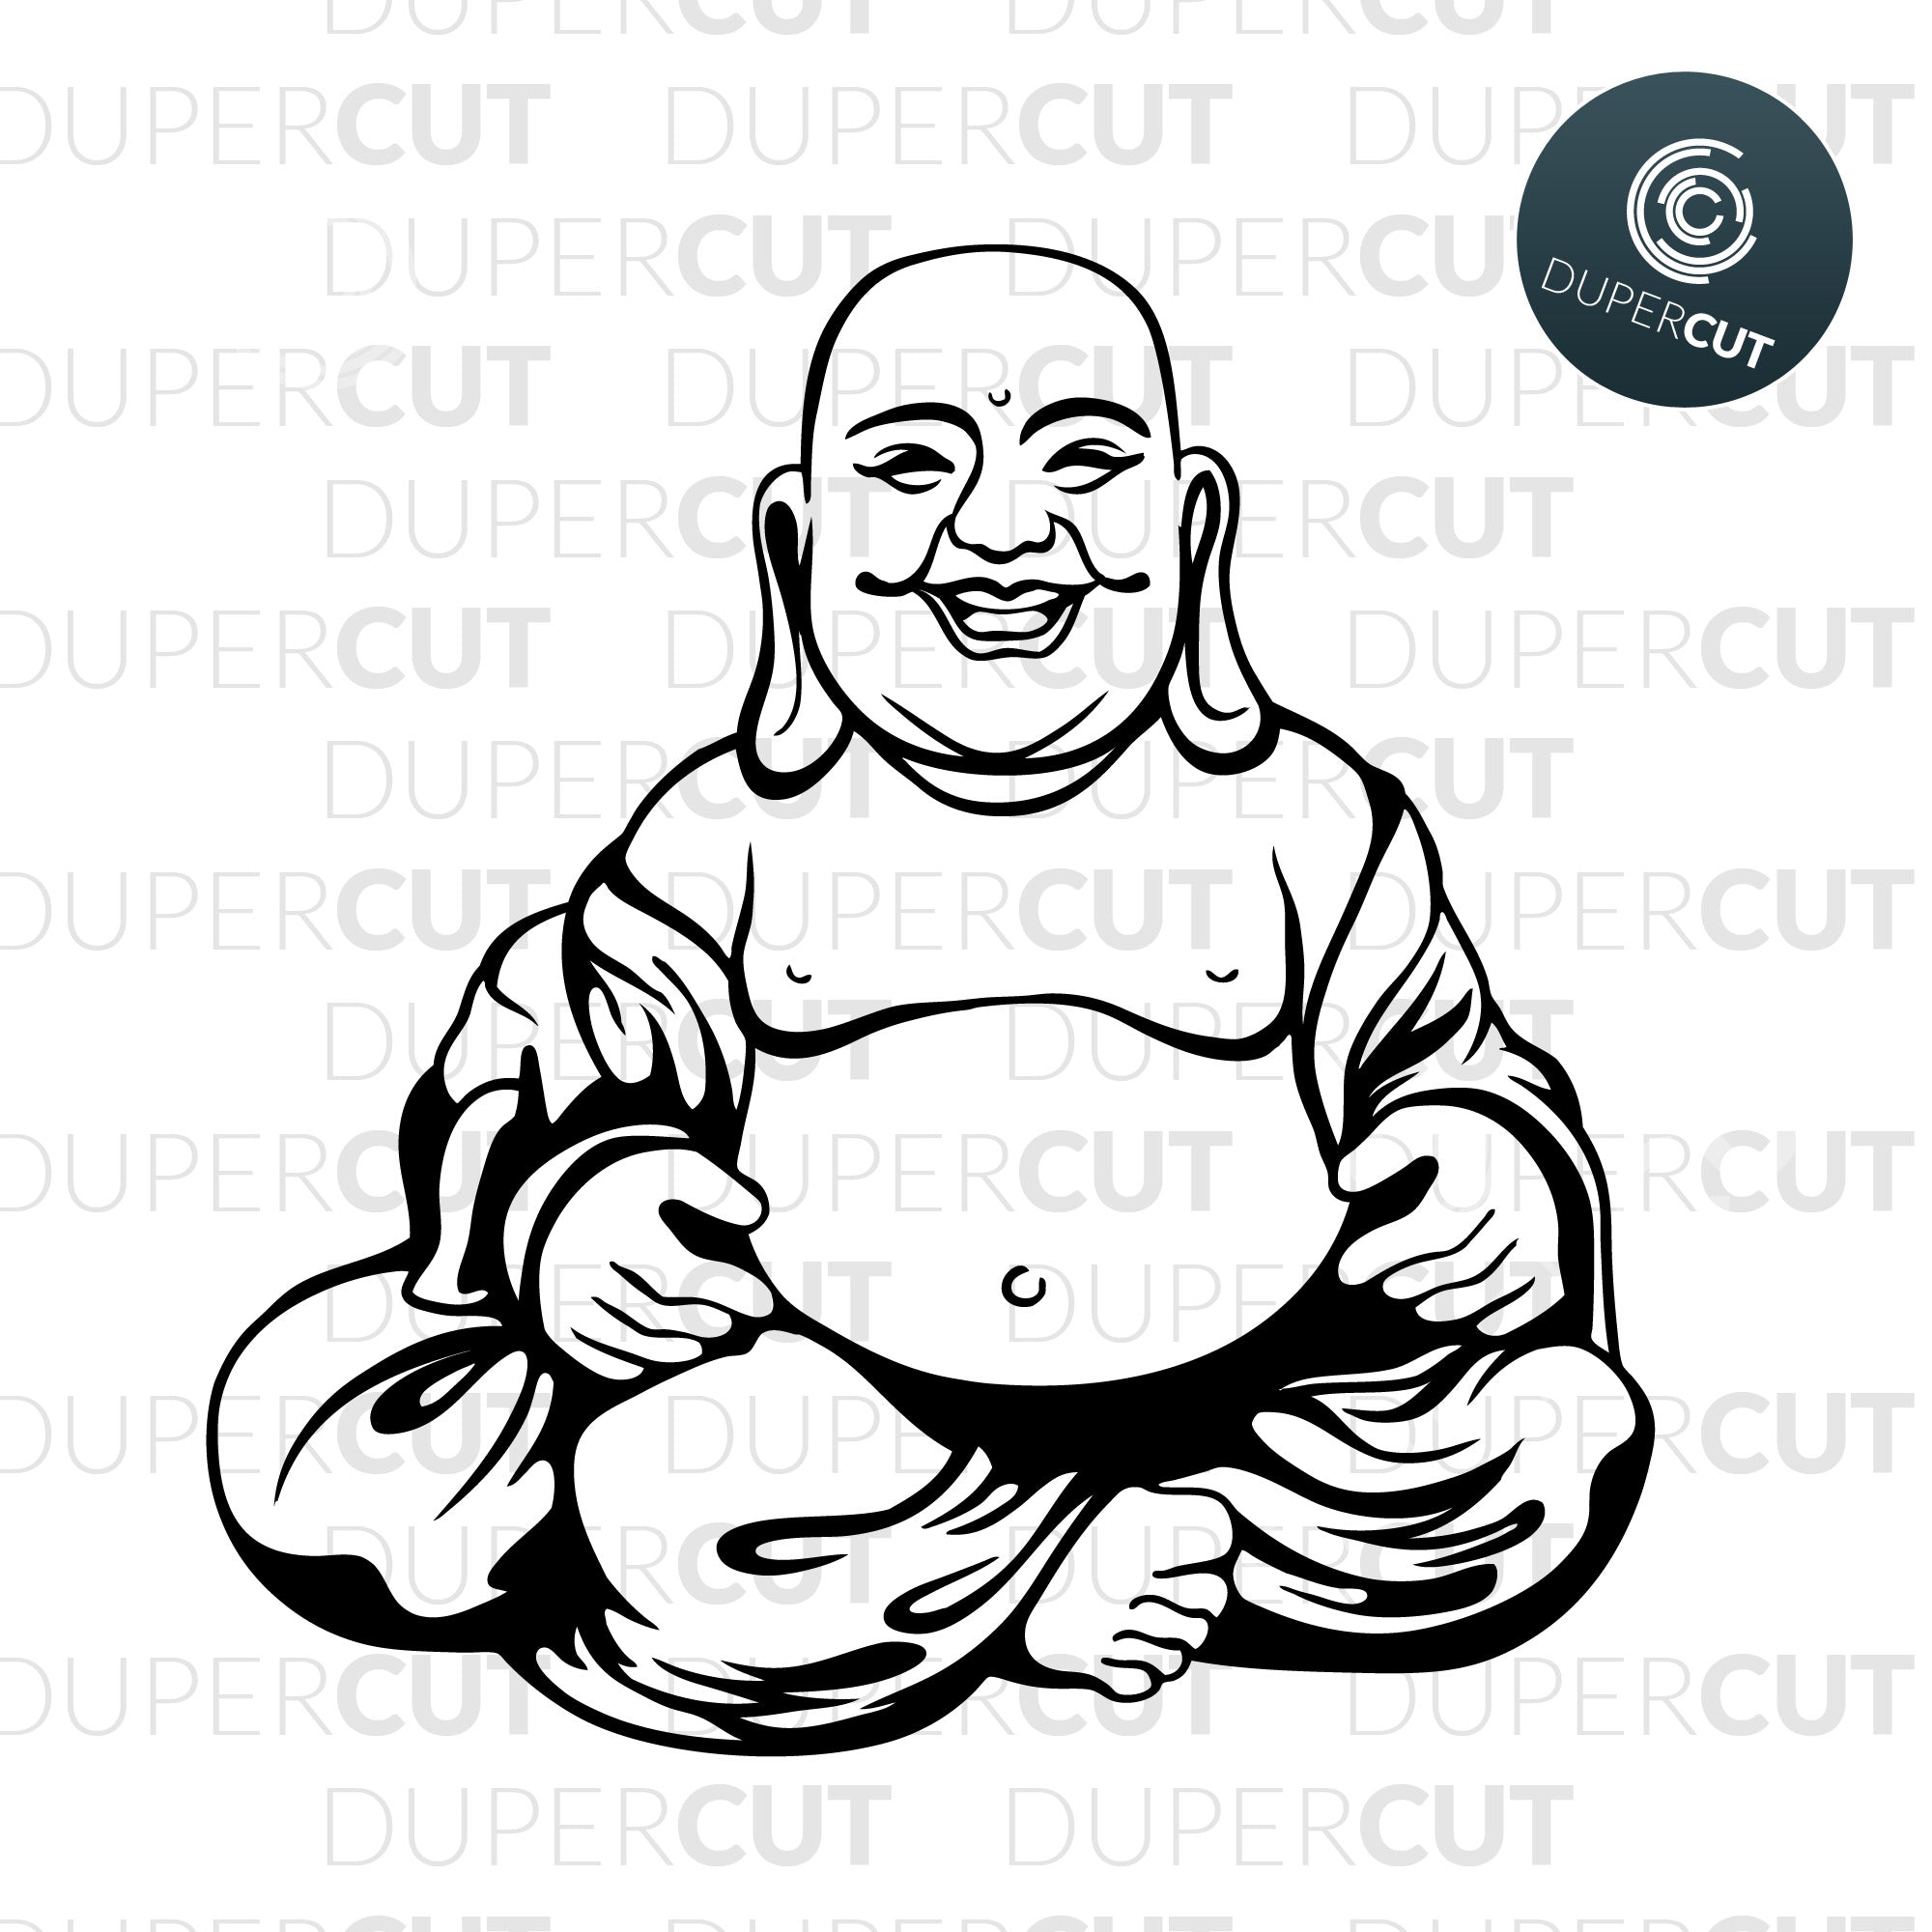 Laughing Buddha Card - Leah Yael Levy